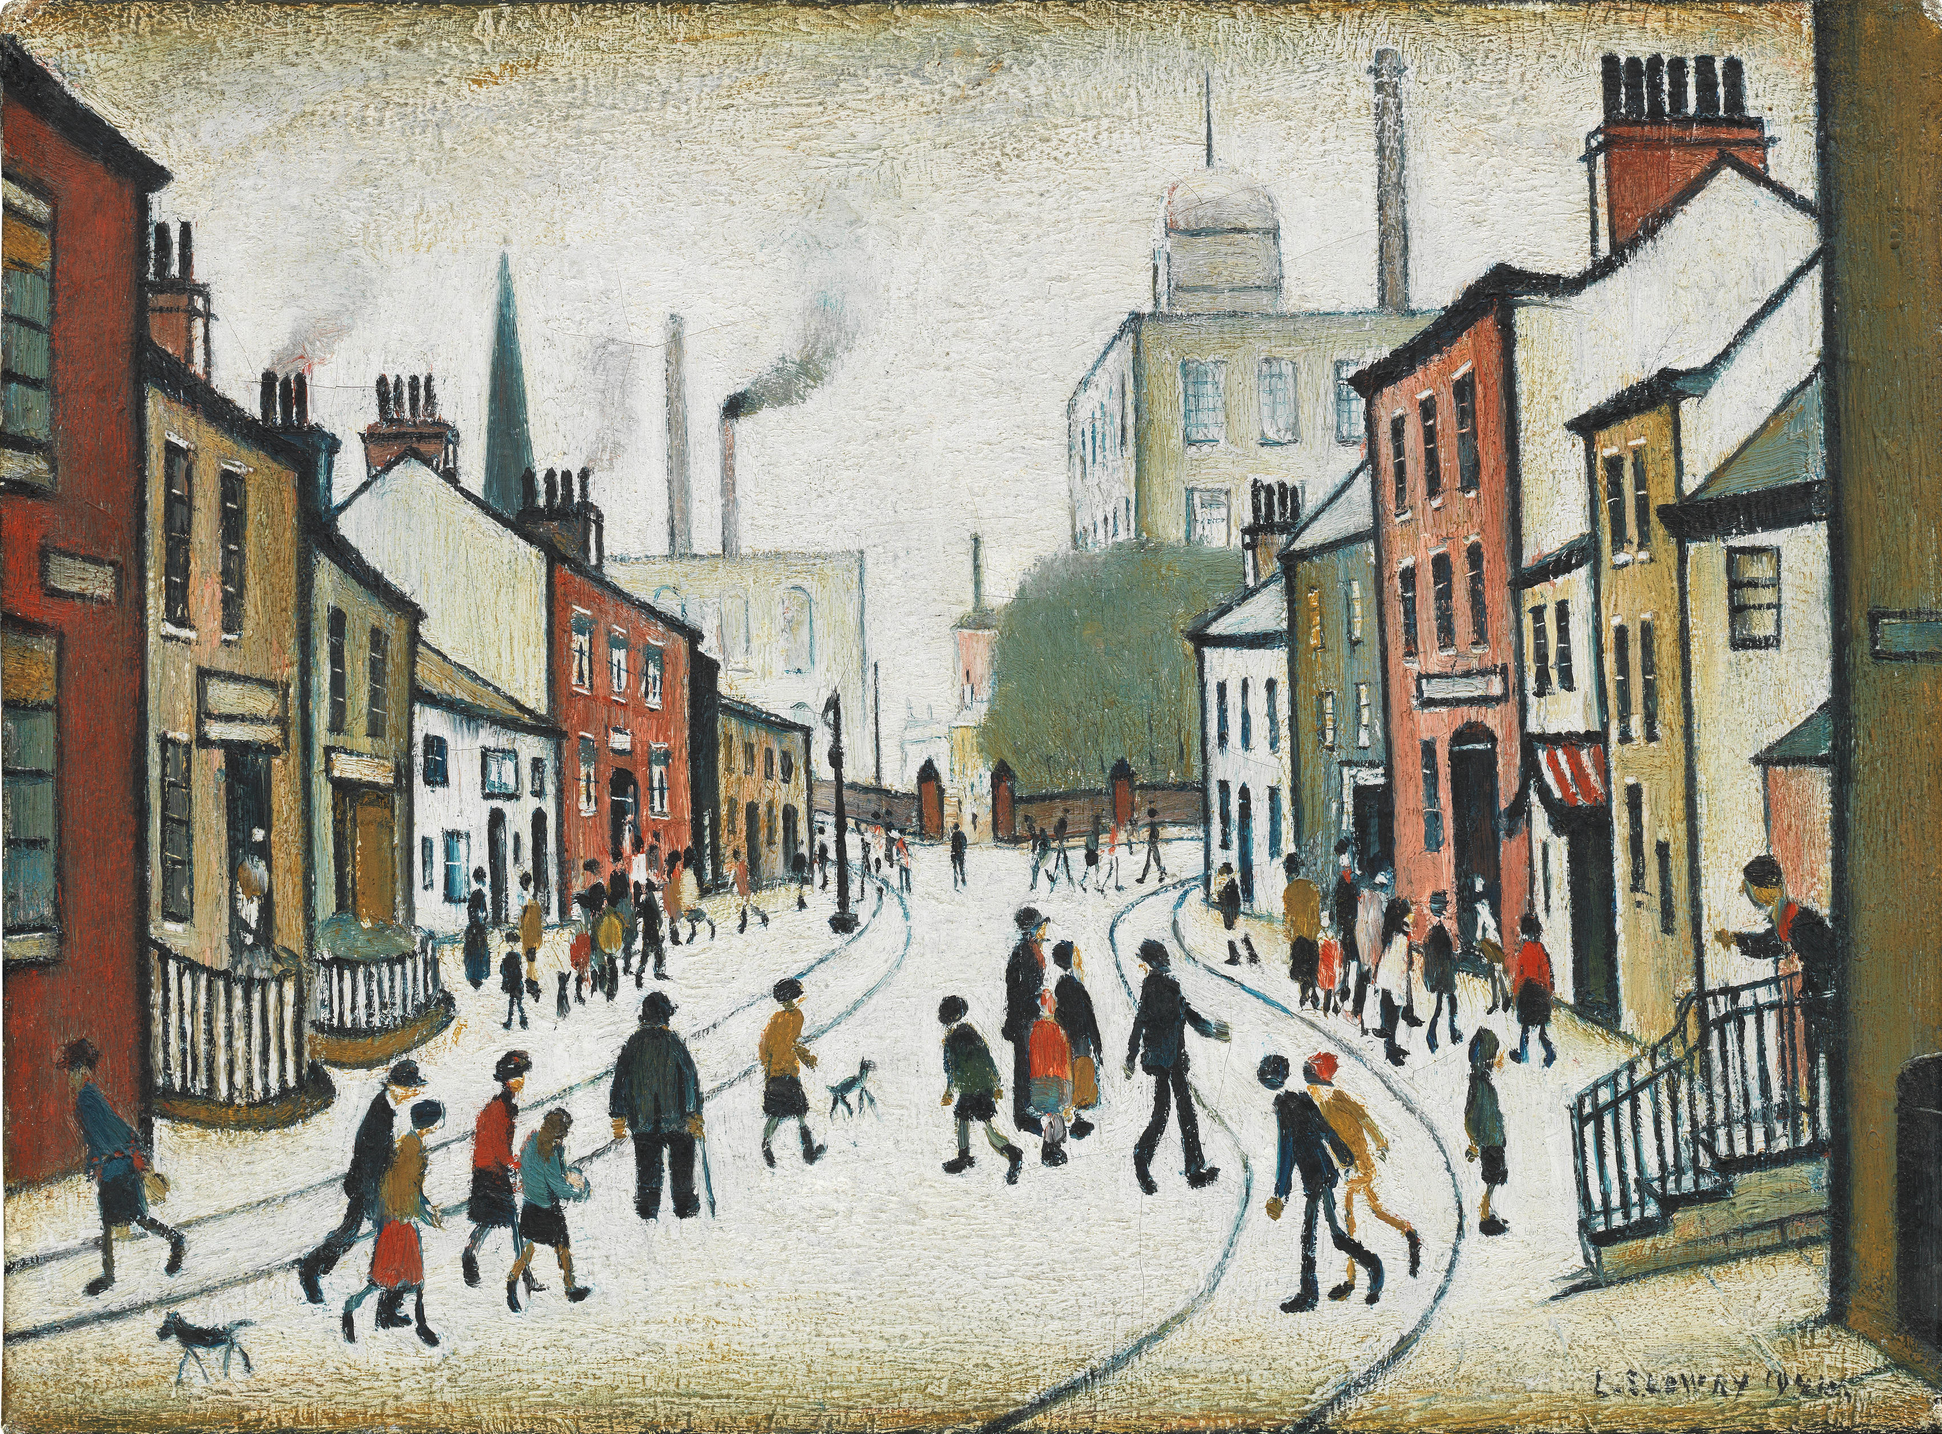 Street Scene (1941) by Laurence Stephen Lowry (1887 - 1976), English artist.